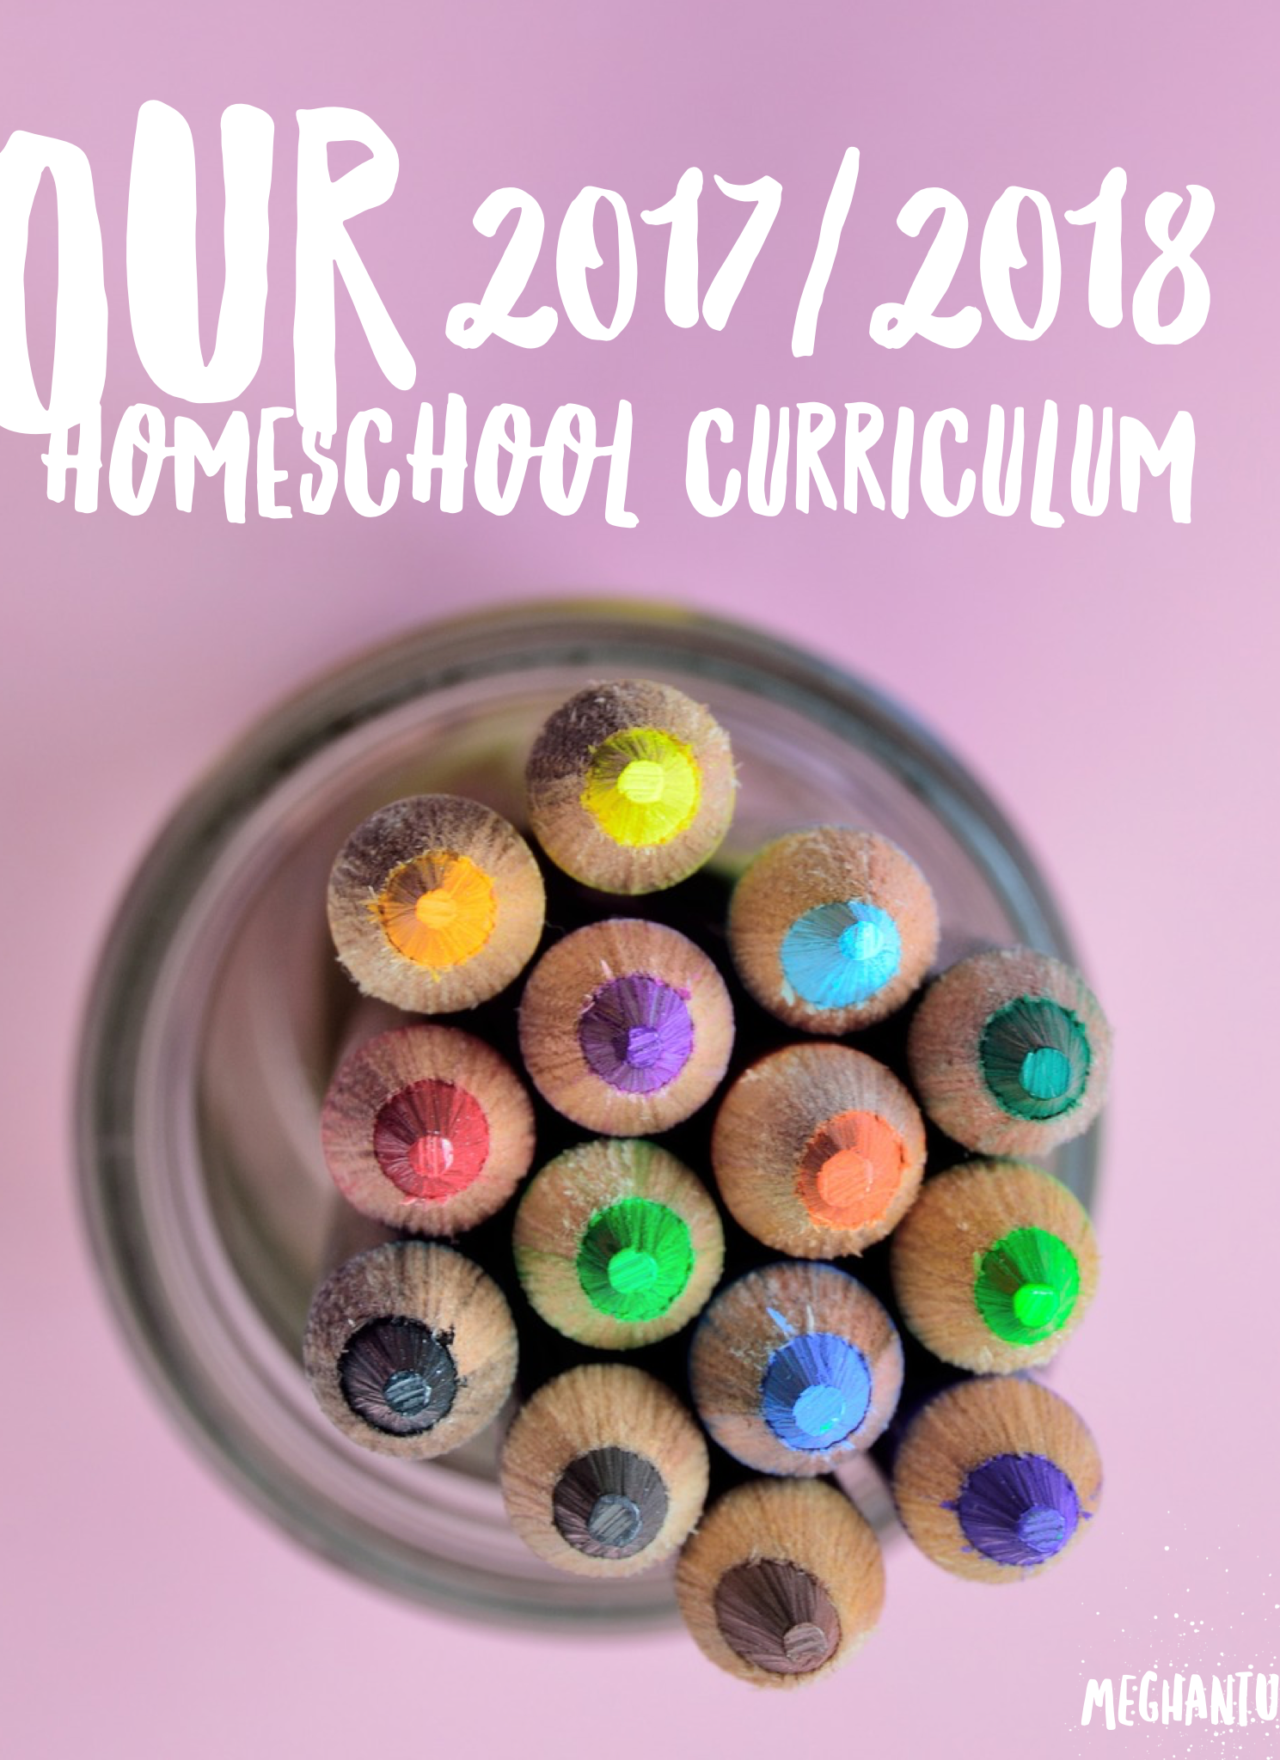 Our 2017/2018 Homeschool Curriculum Choice